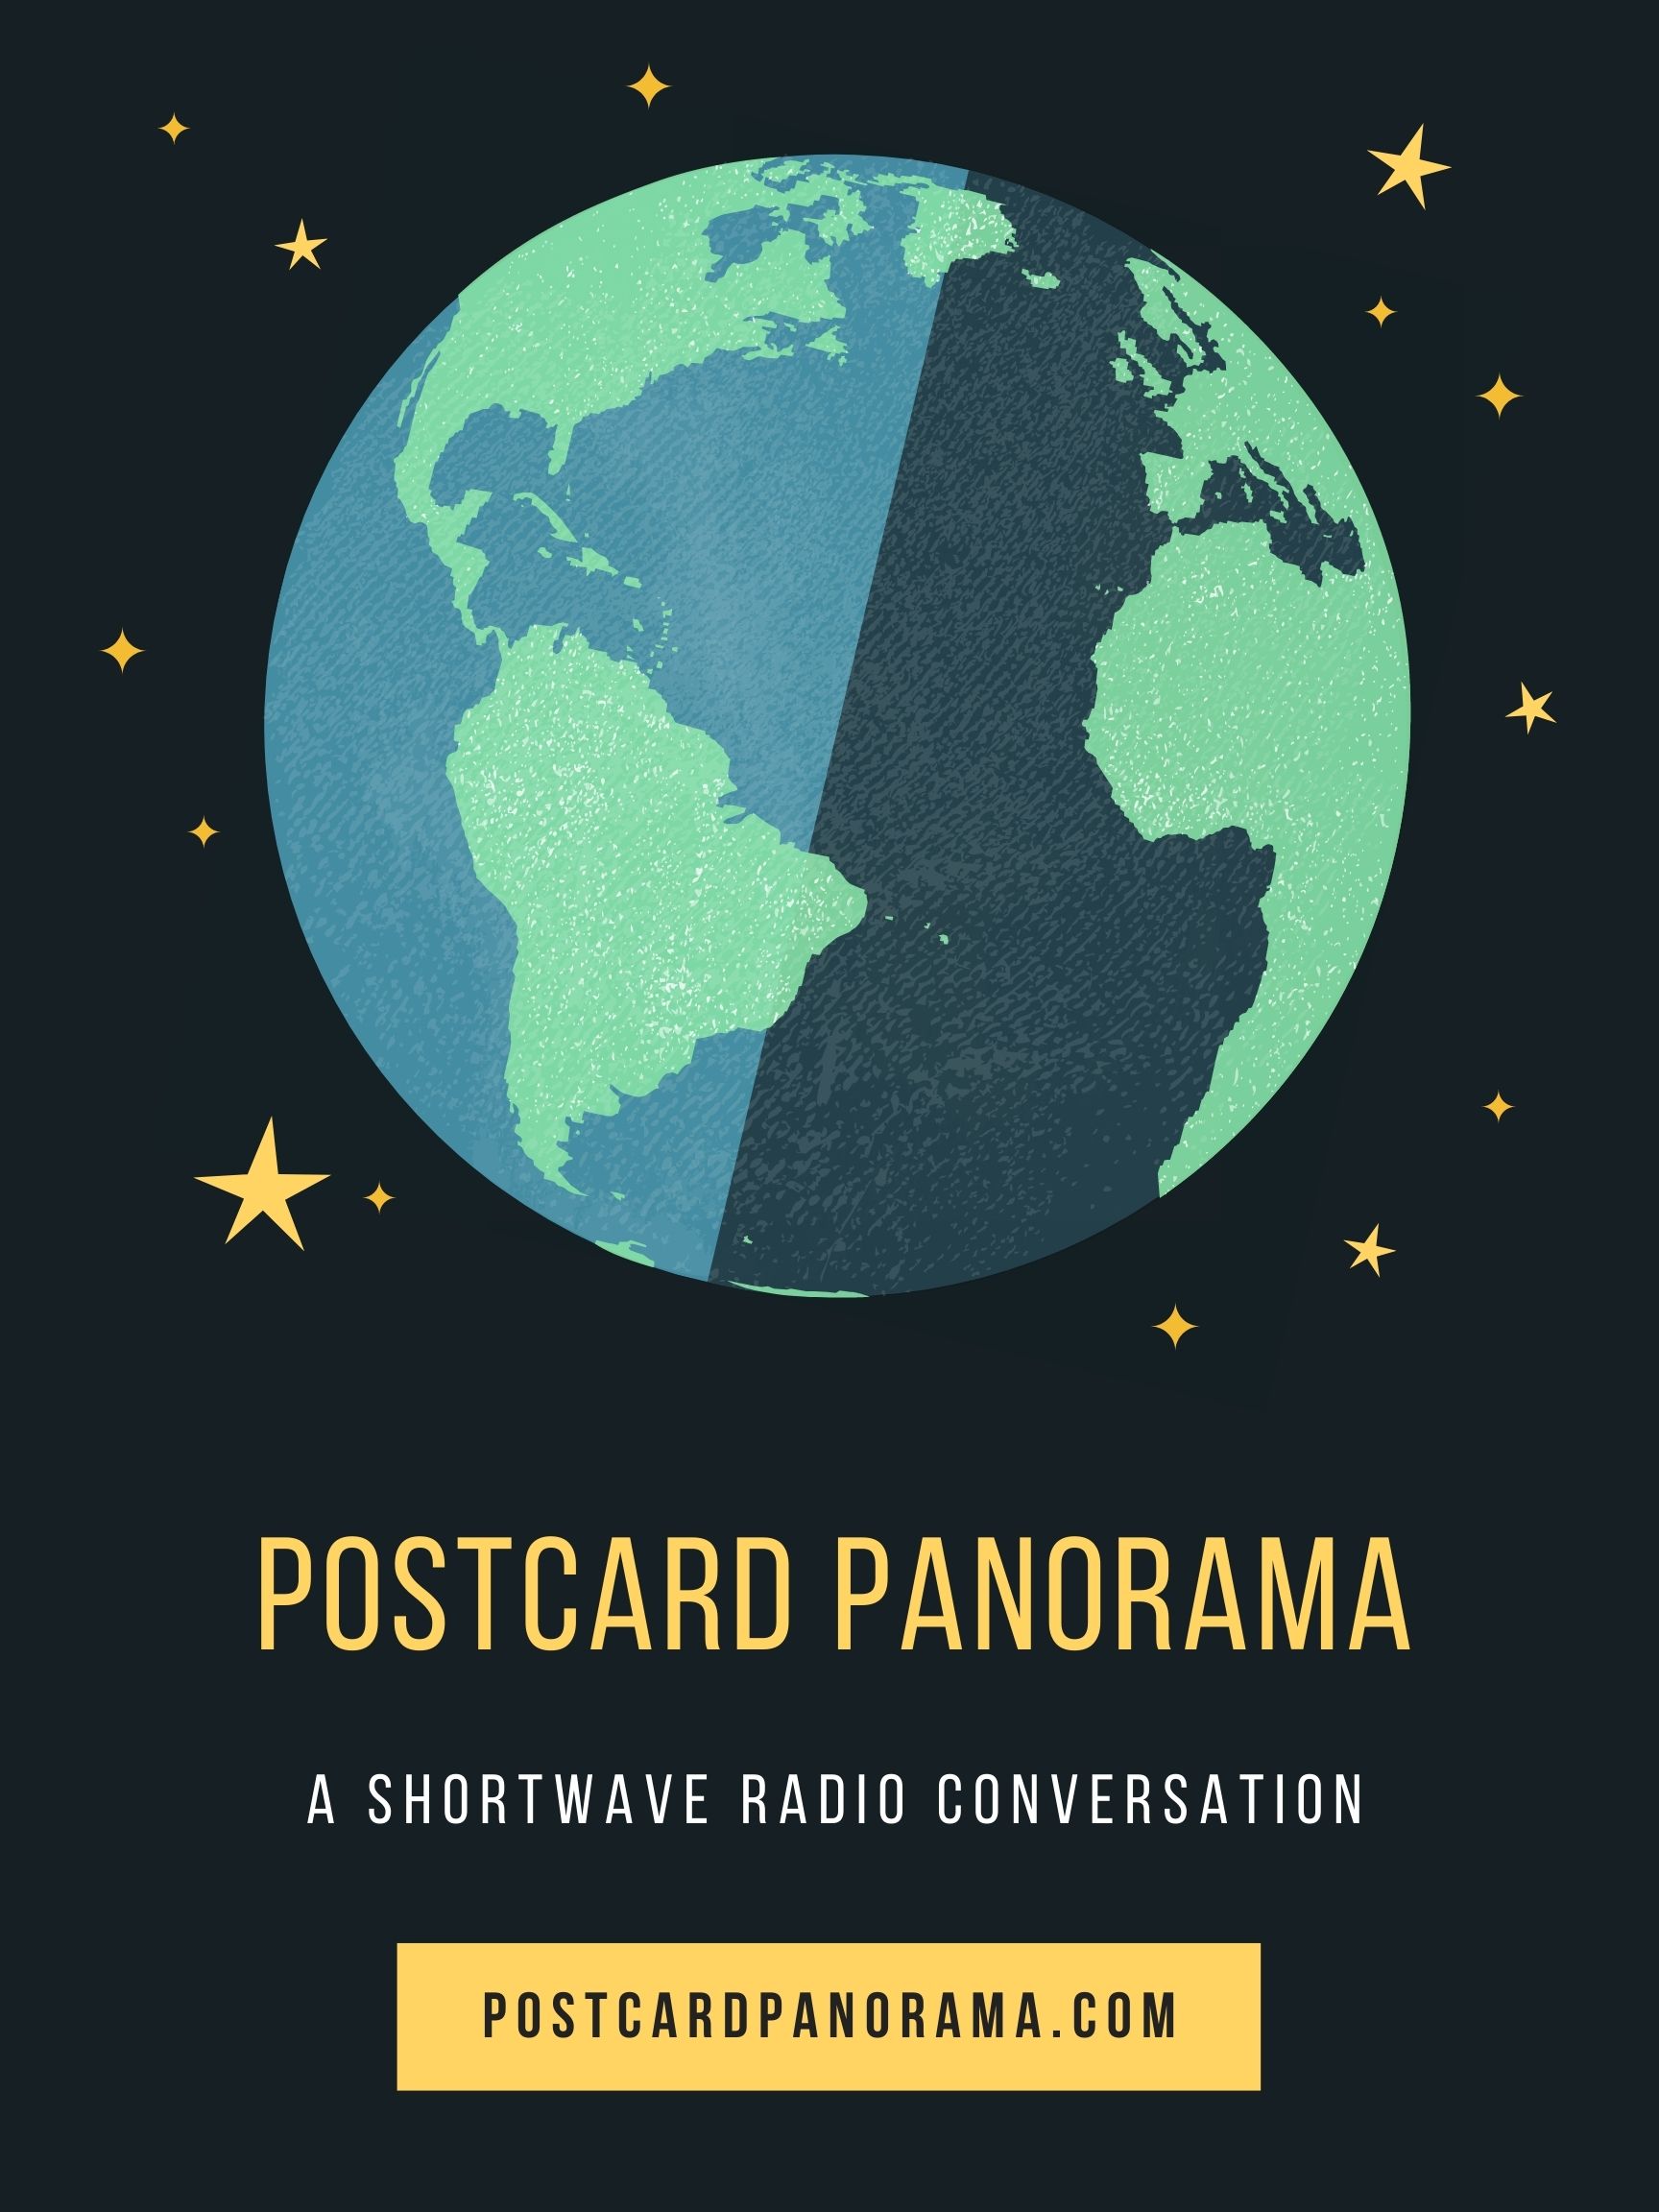 Postcard Panorama logo.jpg